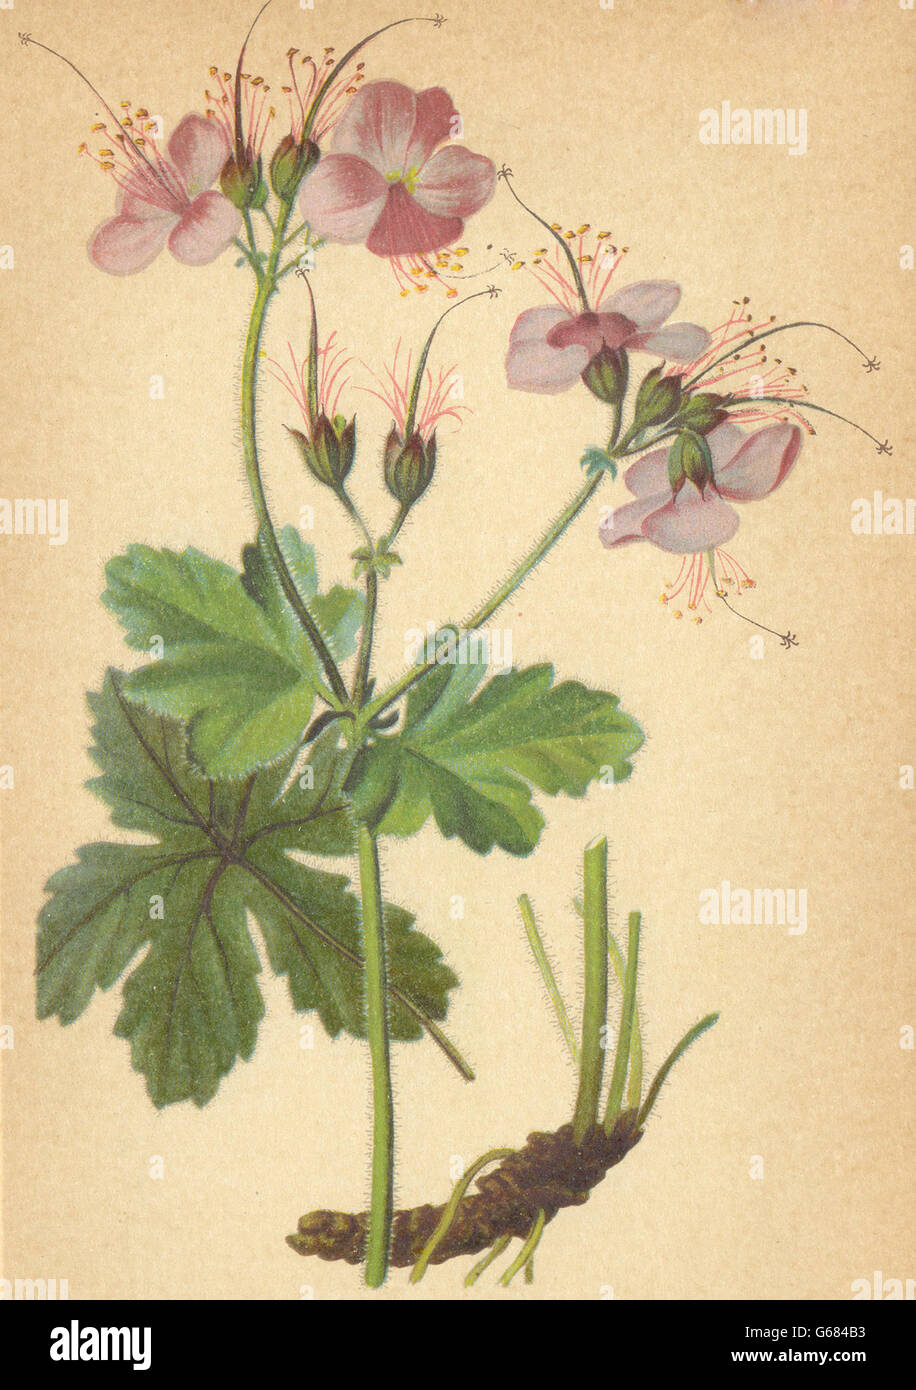 ALPINE FLOWERS: Geranium macrorrhizum L-Grosswurzeliger Storchschnabel, 1897 Stock Photo